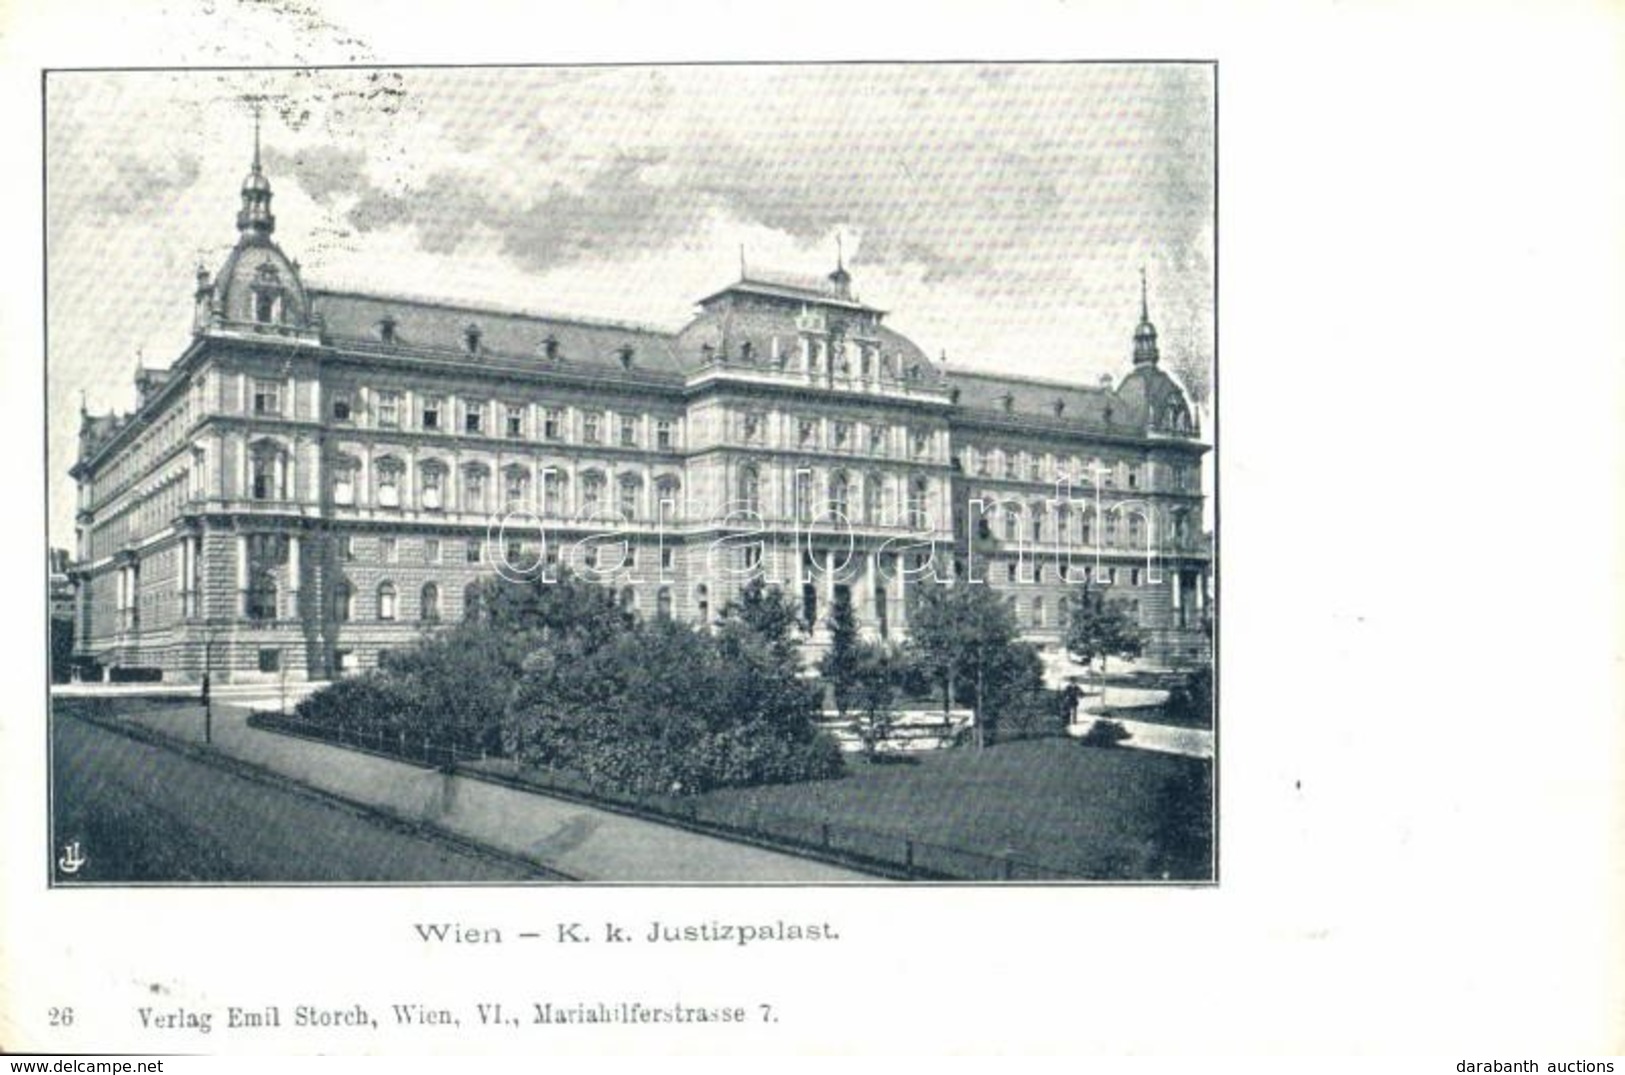 T2/T3 1900 Vienna, Wien I. Justizpalast / Palace Of Justice. Verlag Emil Storch 26. (EK) - Unclassified